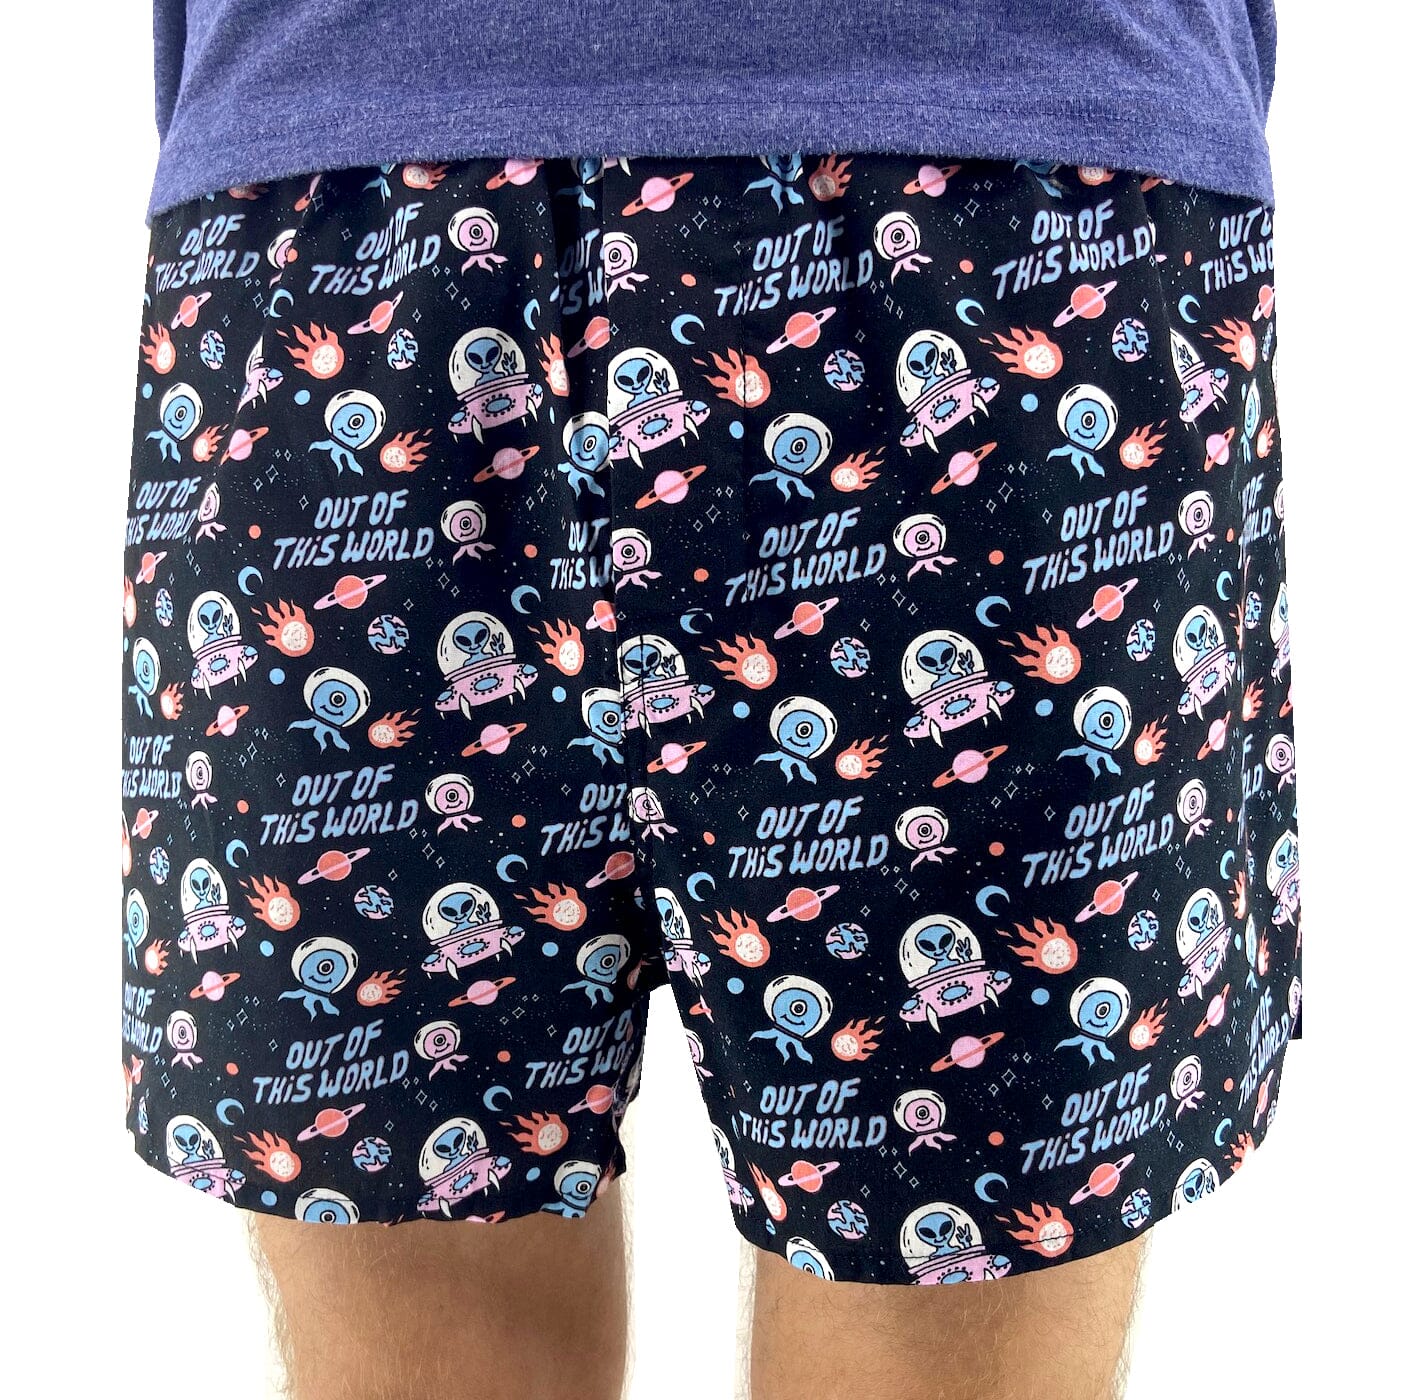 UFO Boxers For Men. Buy Men's Outer Space Alien Print Boxer Shorts